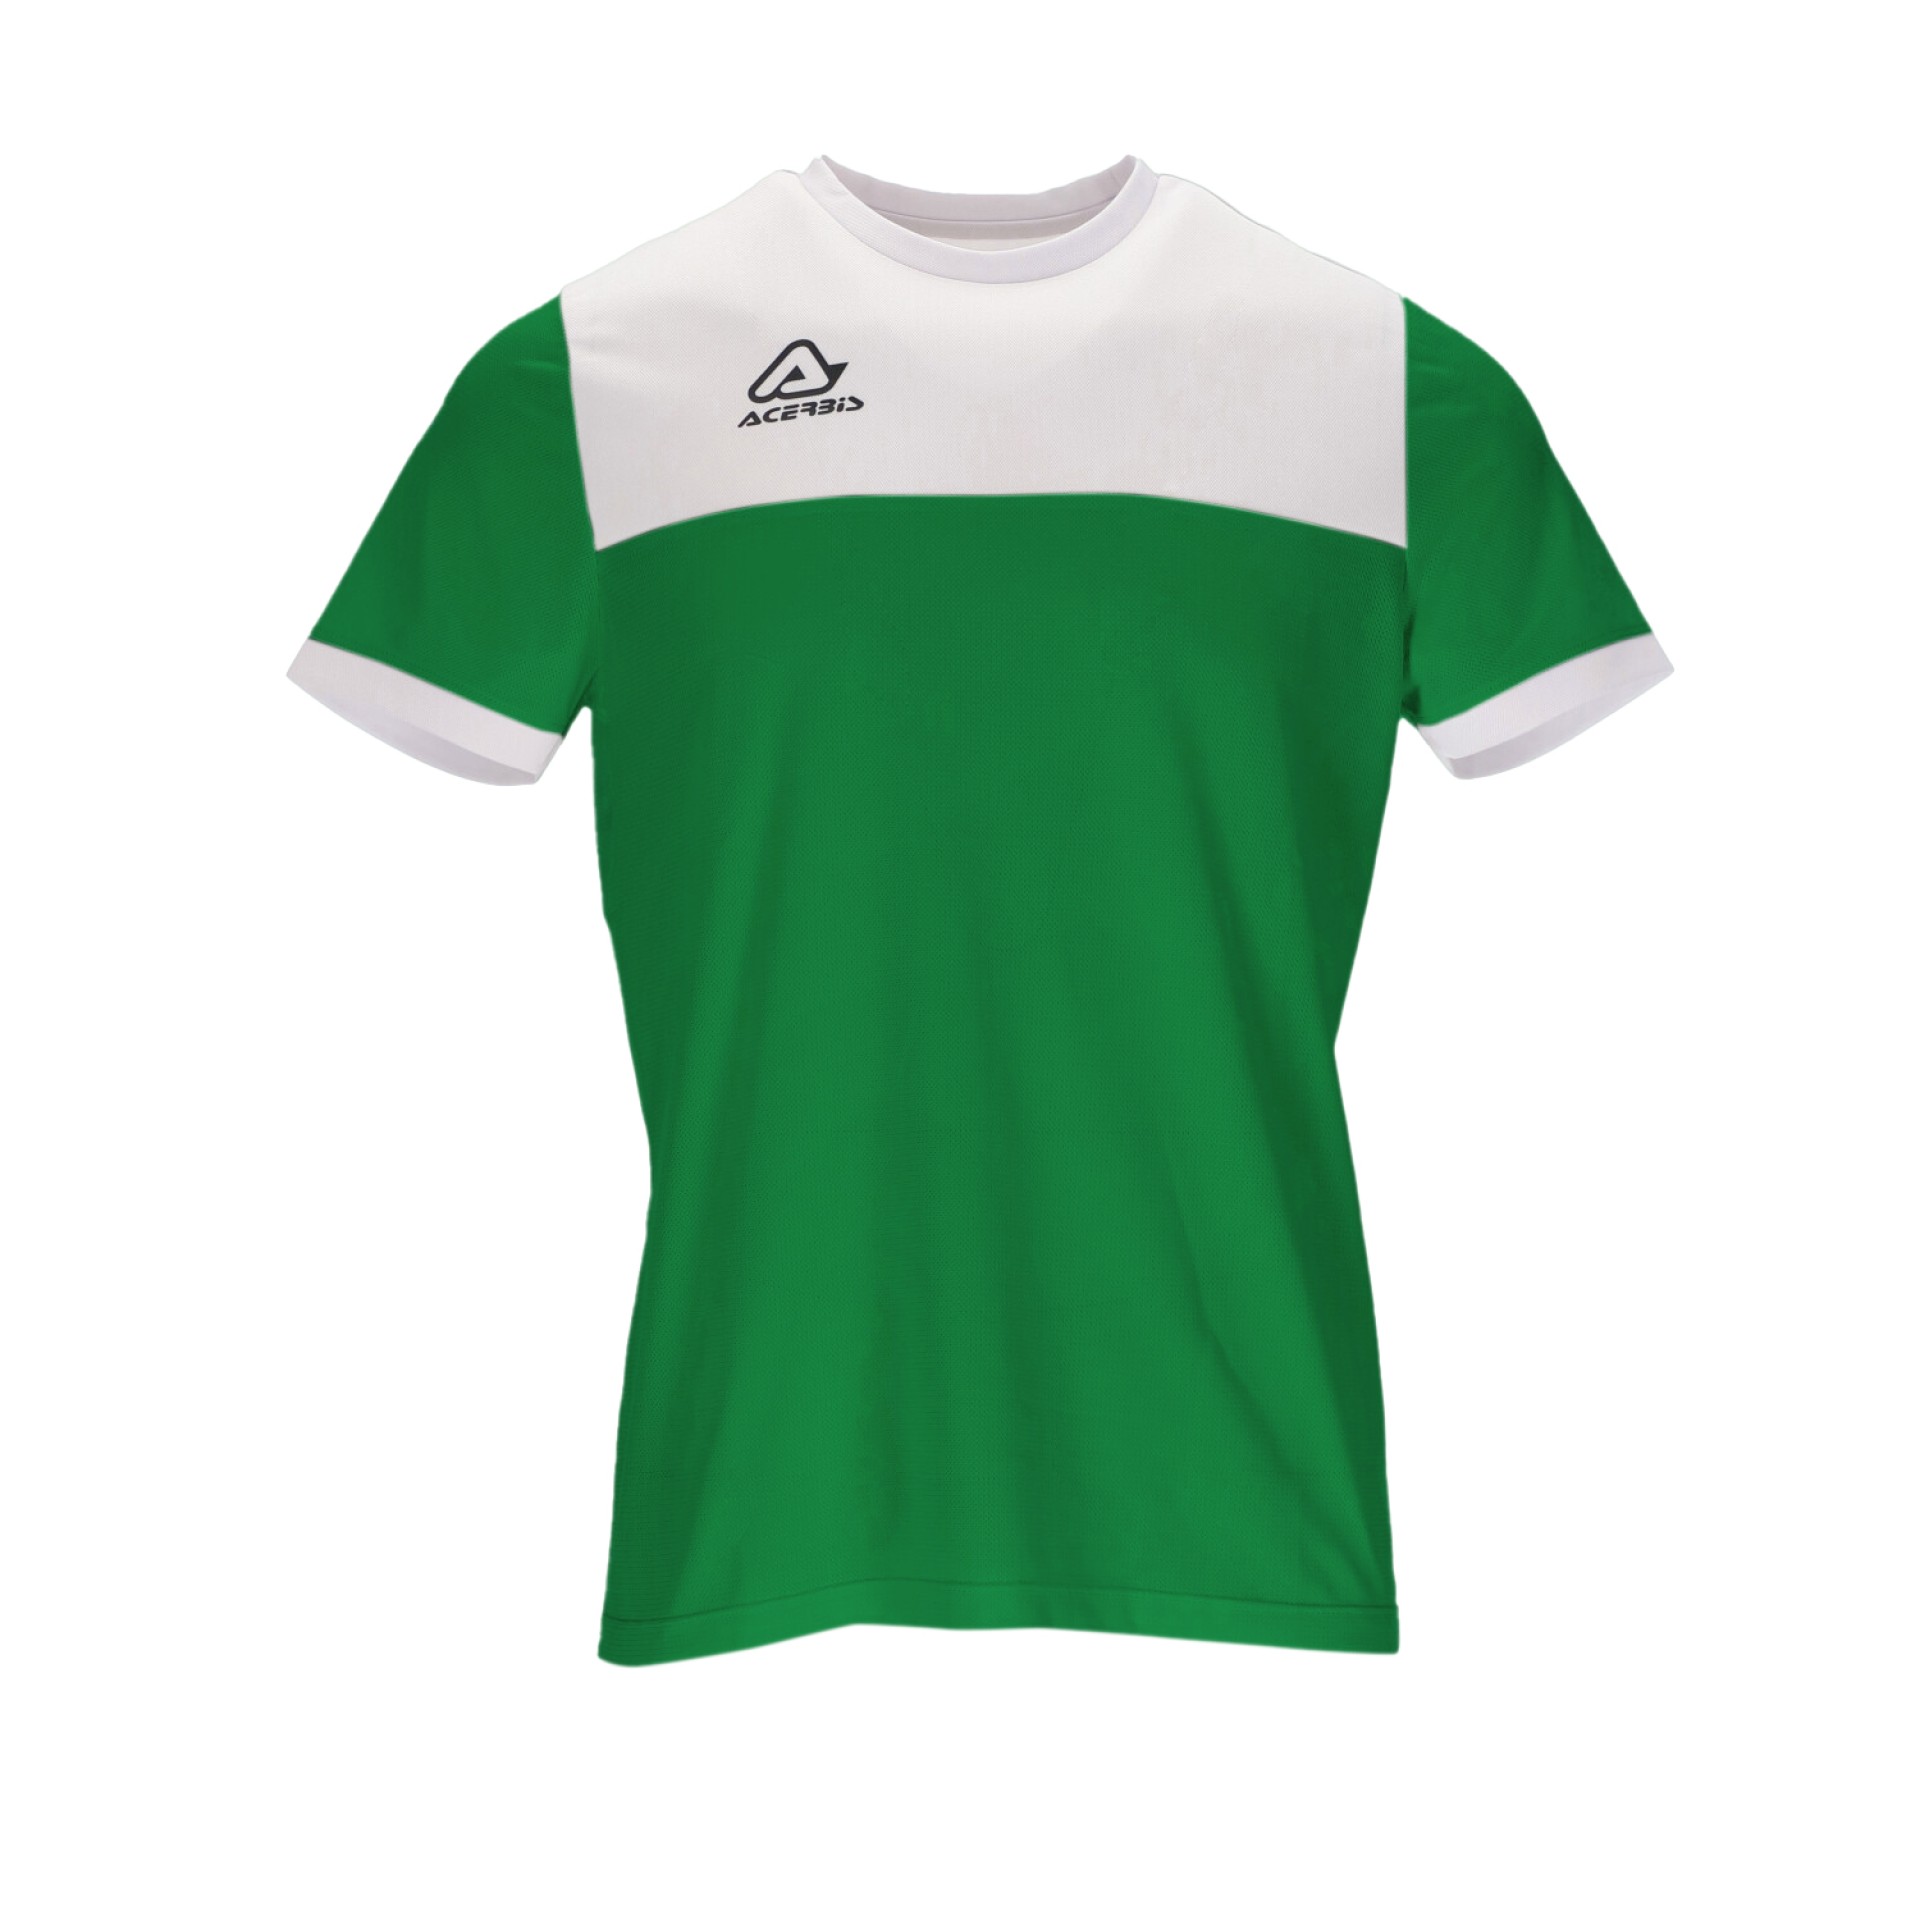 Acerbis Harpaston Football Shirt Green White